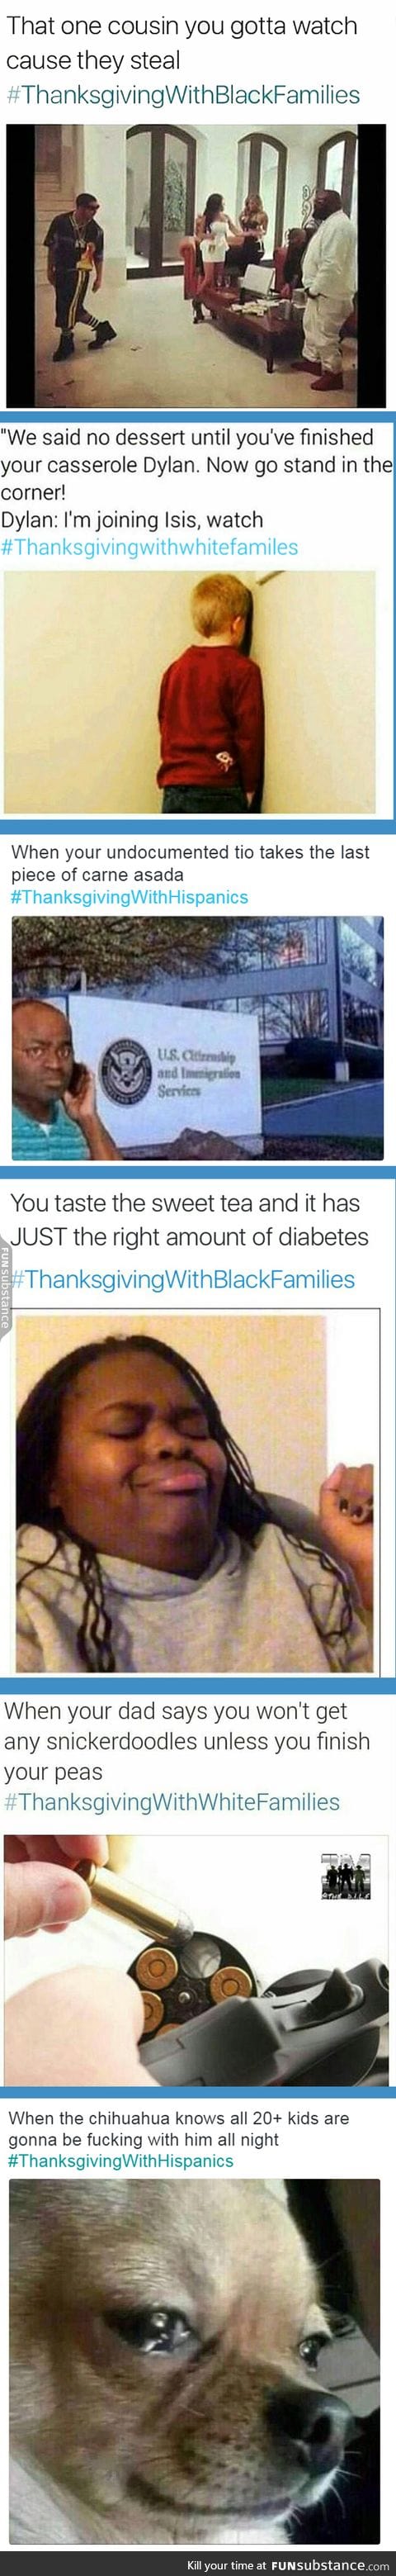 Thanksgiving Fun w/ Stereotypes